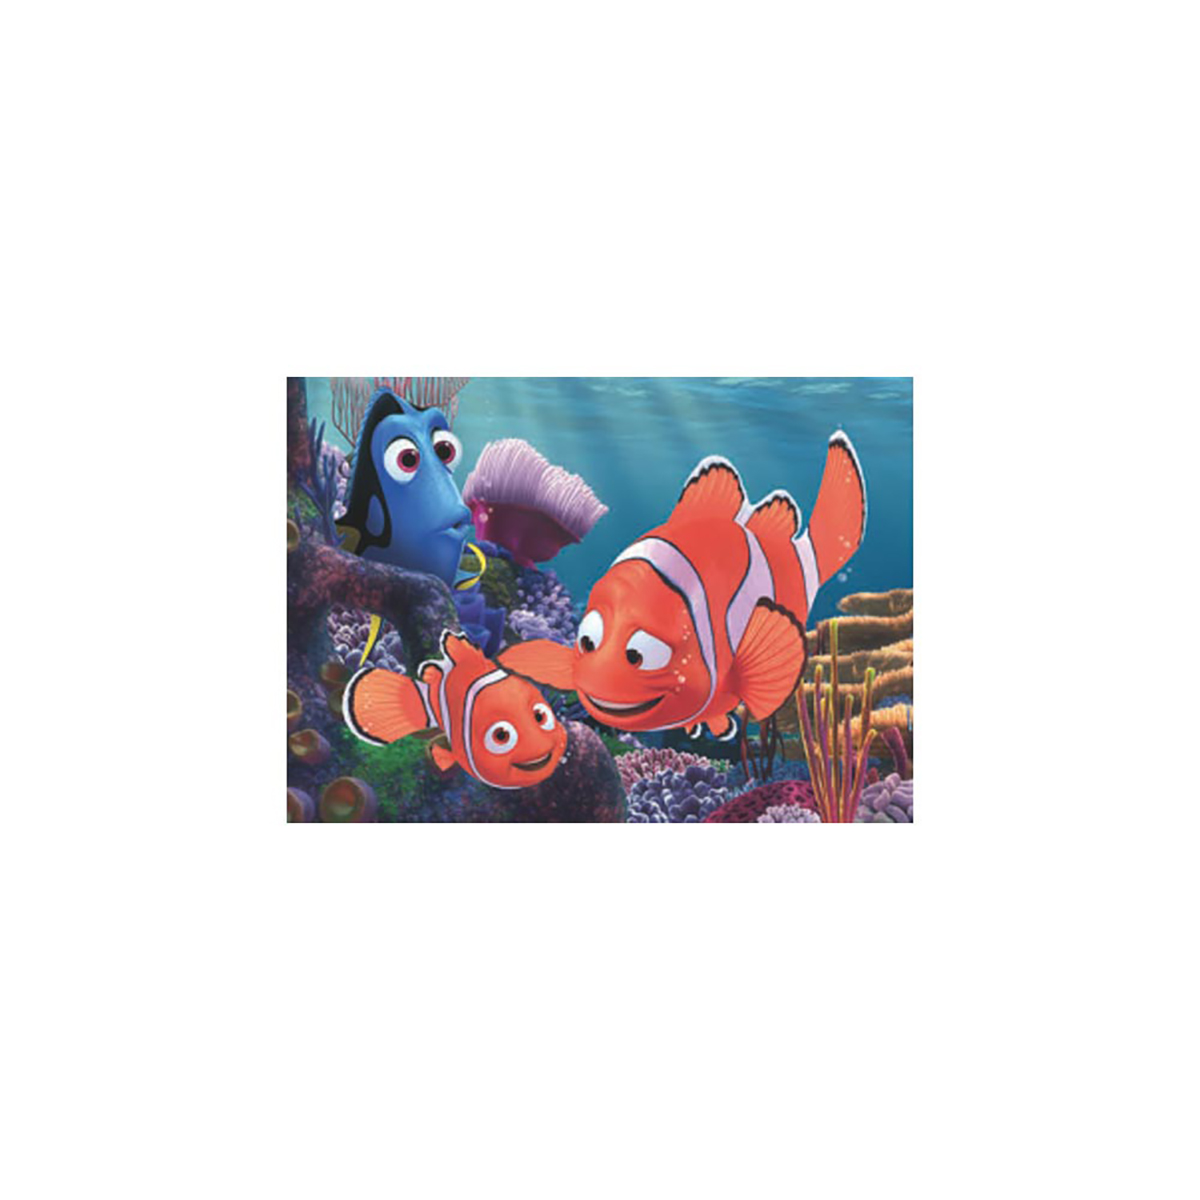 Puzzle in Tragebox Nemo 60 DISNEY Ausmal-Puzzle Lisciani Teile, von Findet